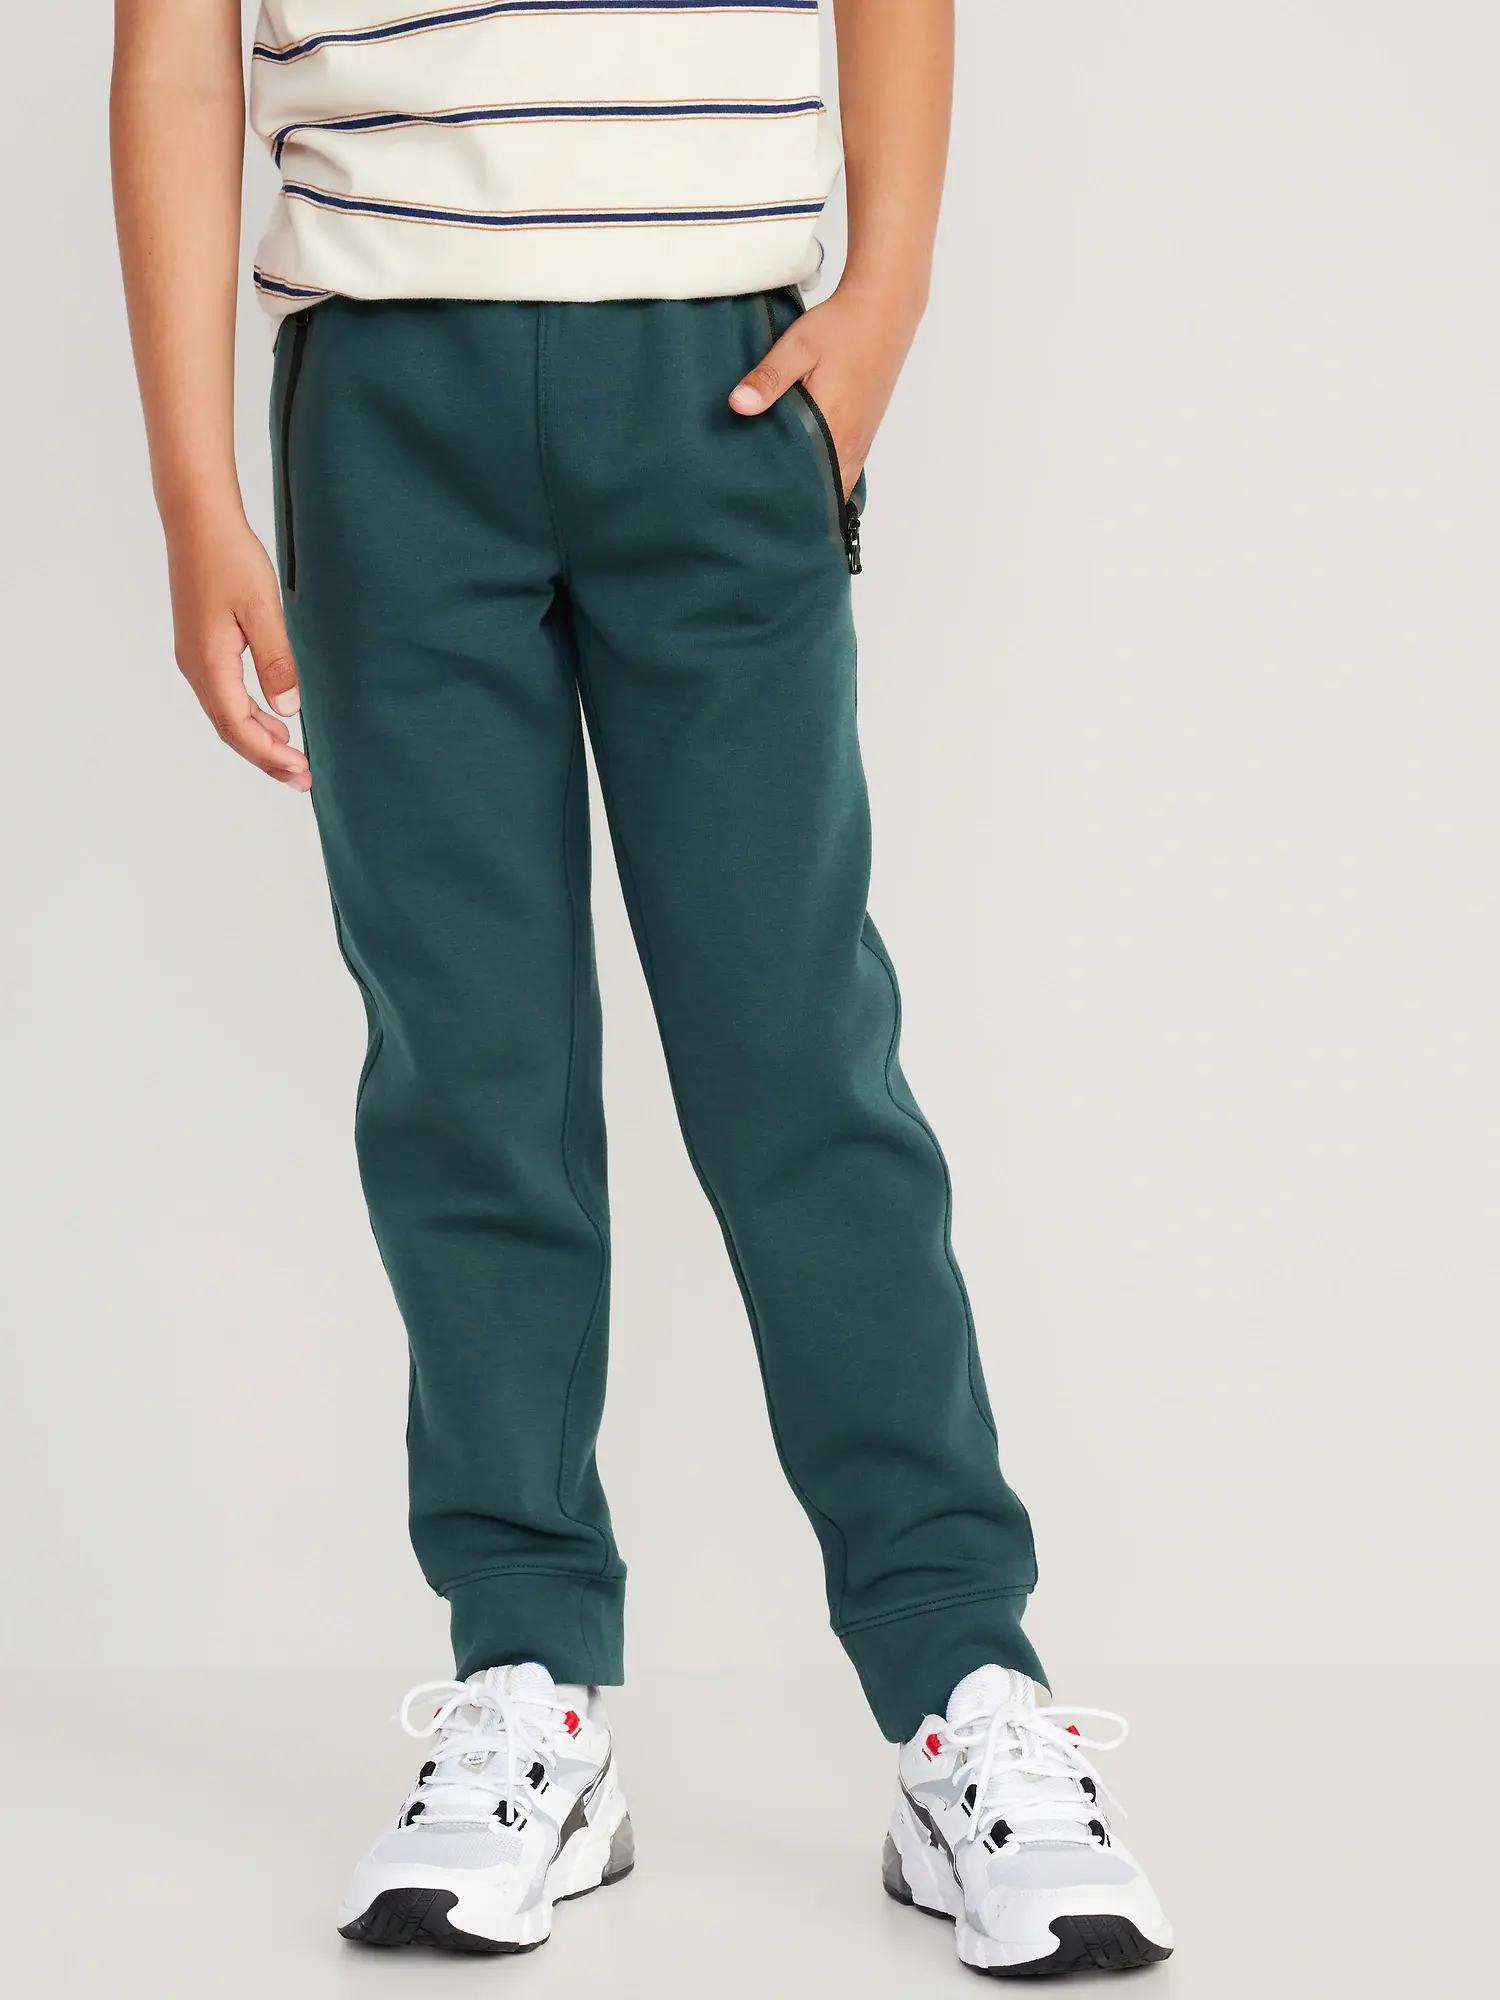 Old Navy Dynamic Fleece Jogger Sweatpants For Boys green. 1